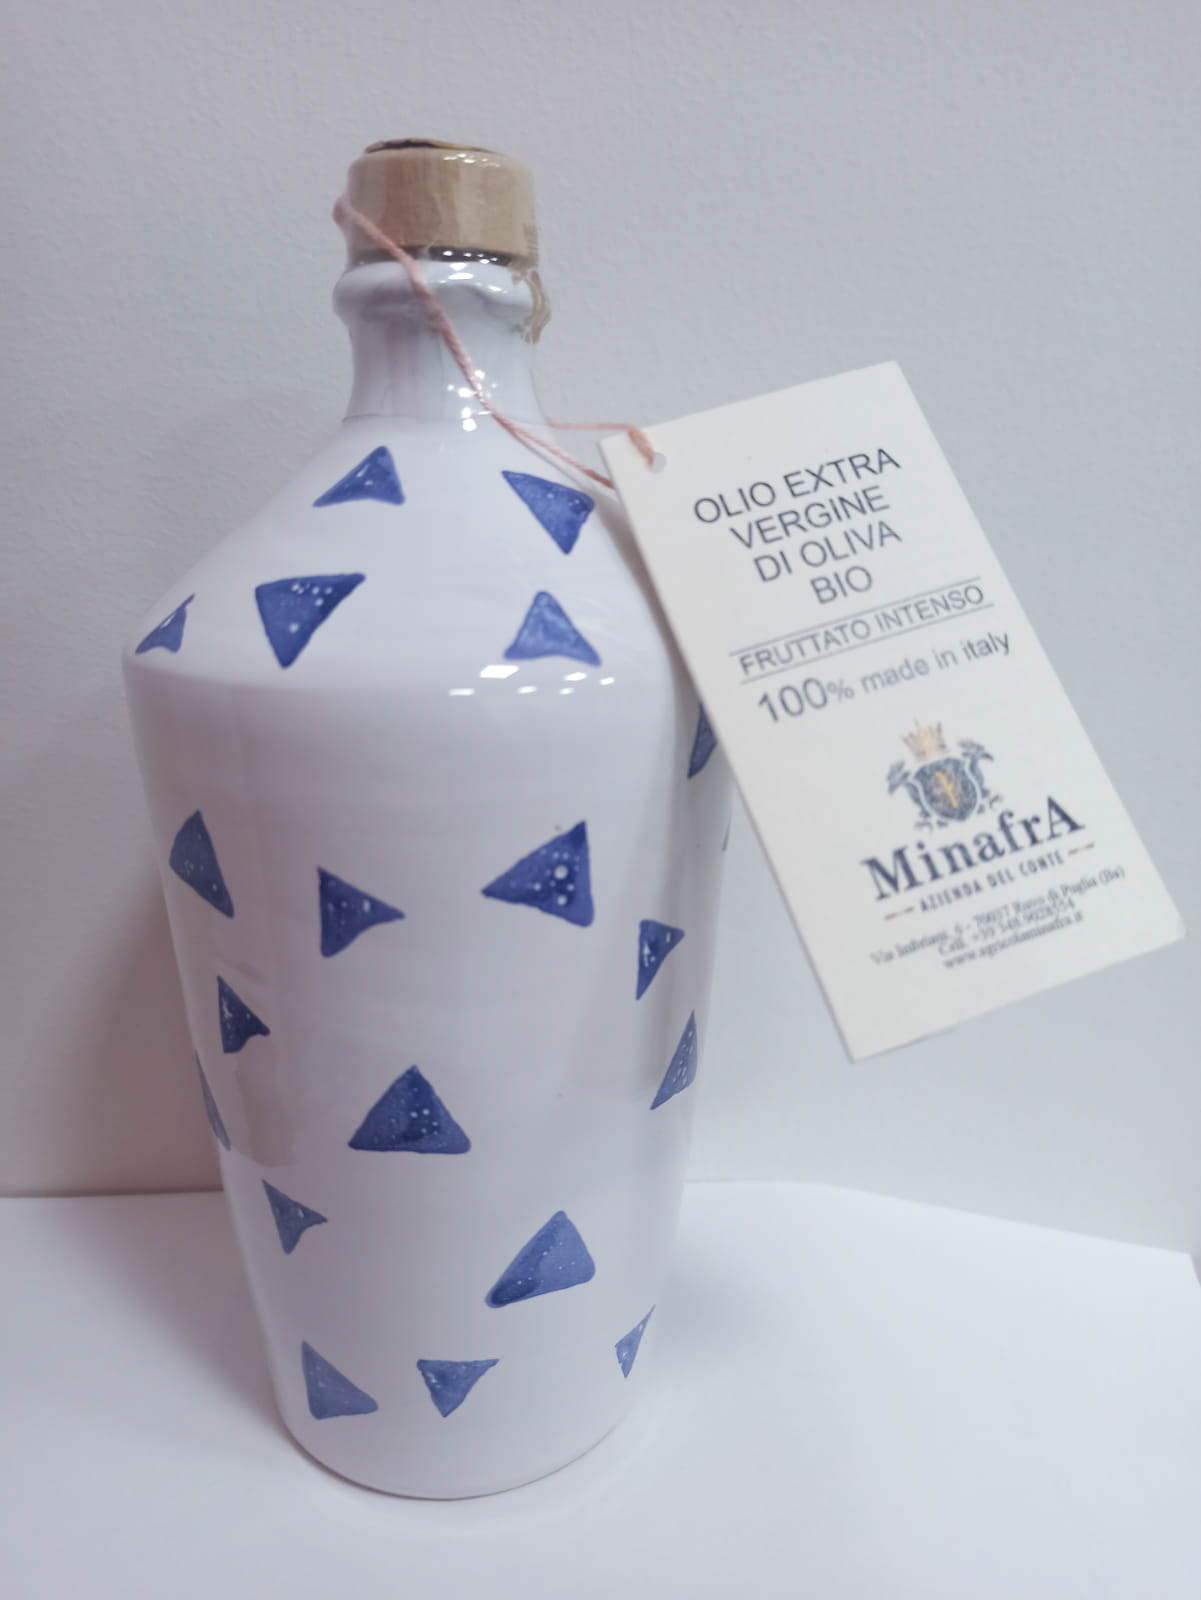 Minafra Olio di Oliva Biologico extra vergine Bottiglia in ceramica blu 500ml